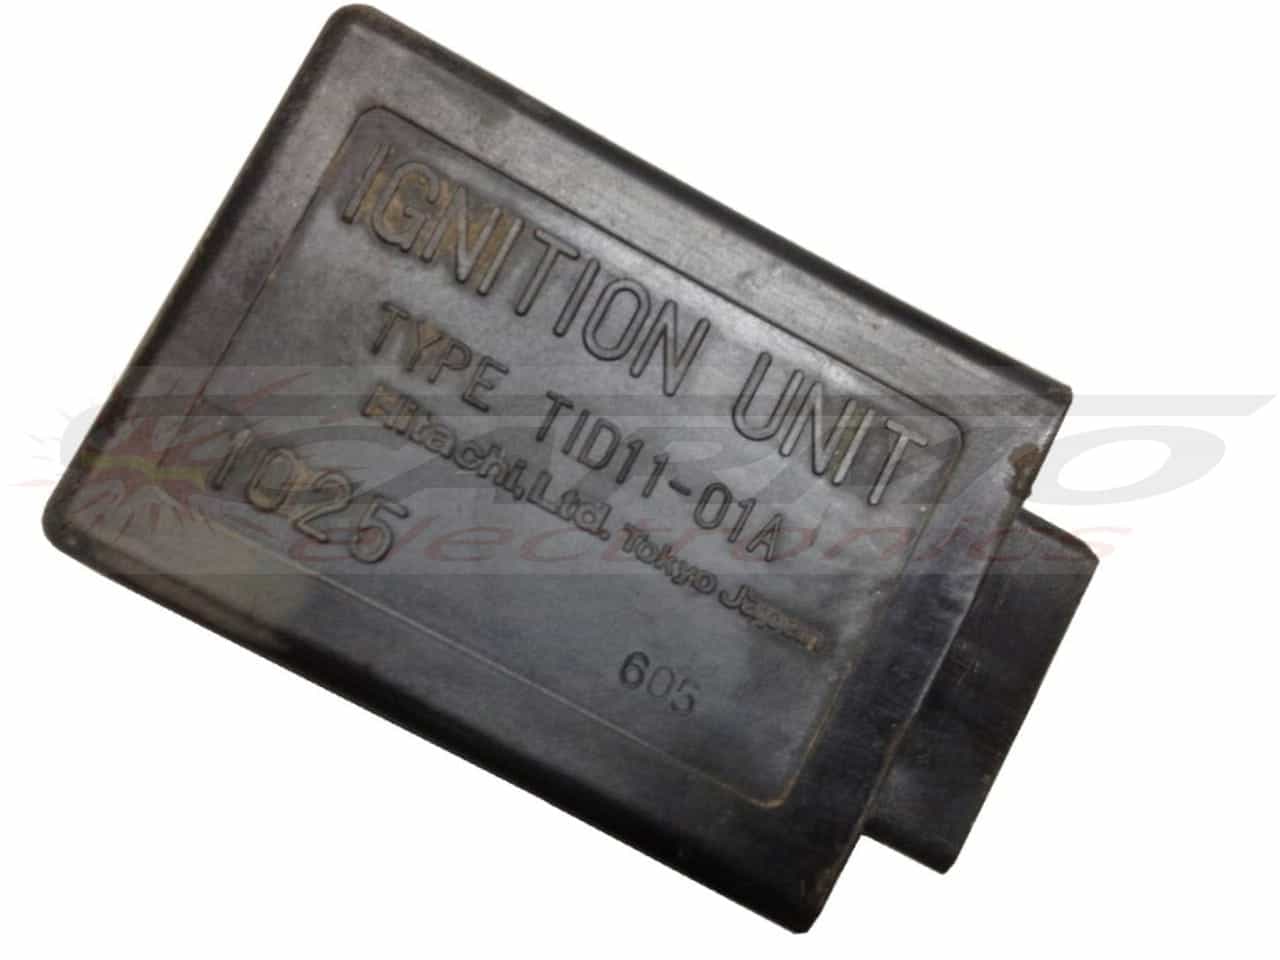 Z250ER (TID11-01, TID11-01A, IGNITION UNIT) CDI ECU ignitor ignition unit